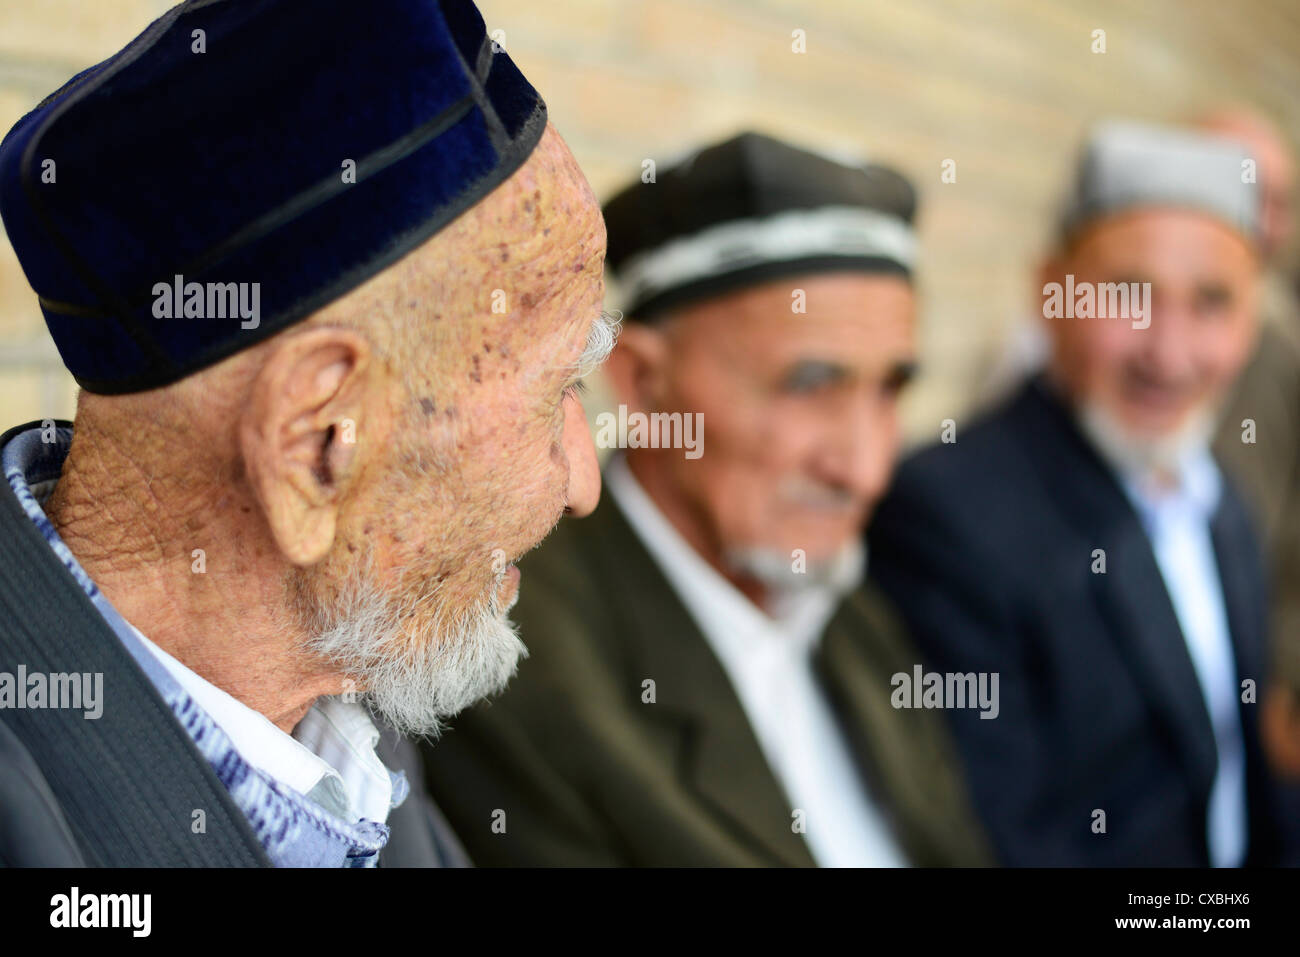 Elderly Tajik men ( from Uzbekistan) in an old neighborhood in Samarkand. Stock Photo